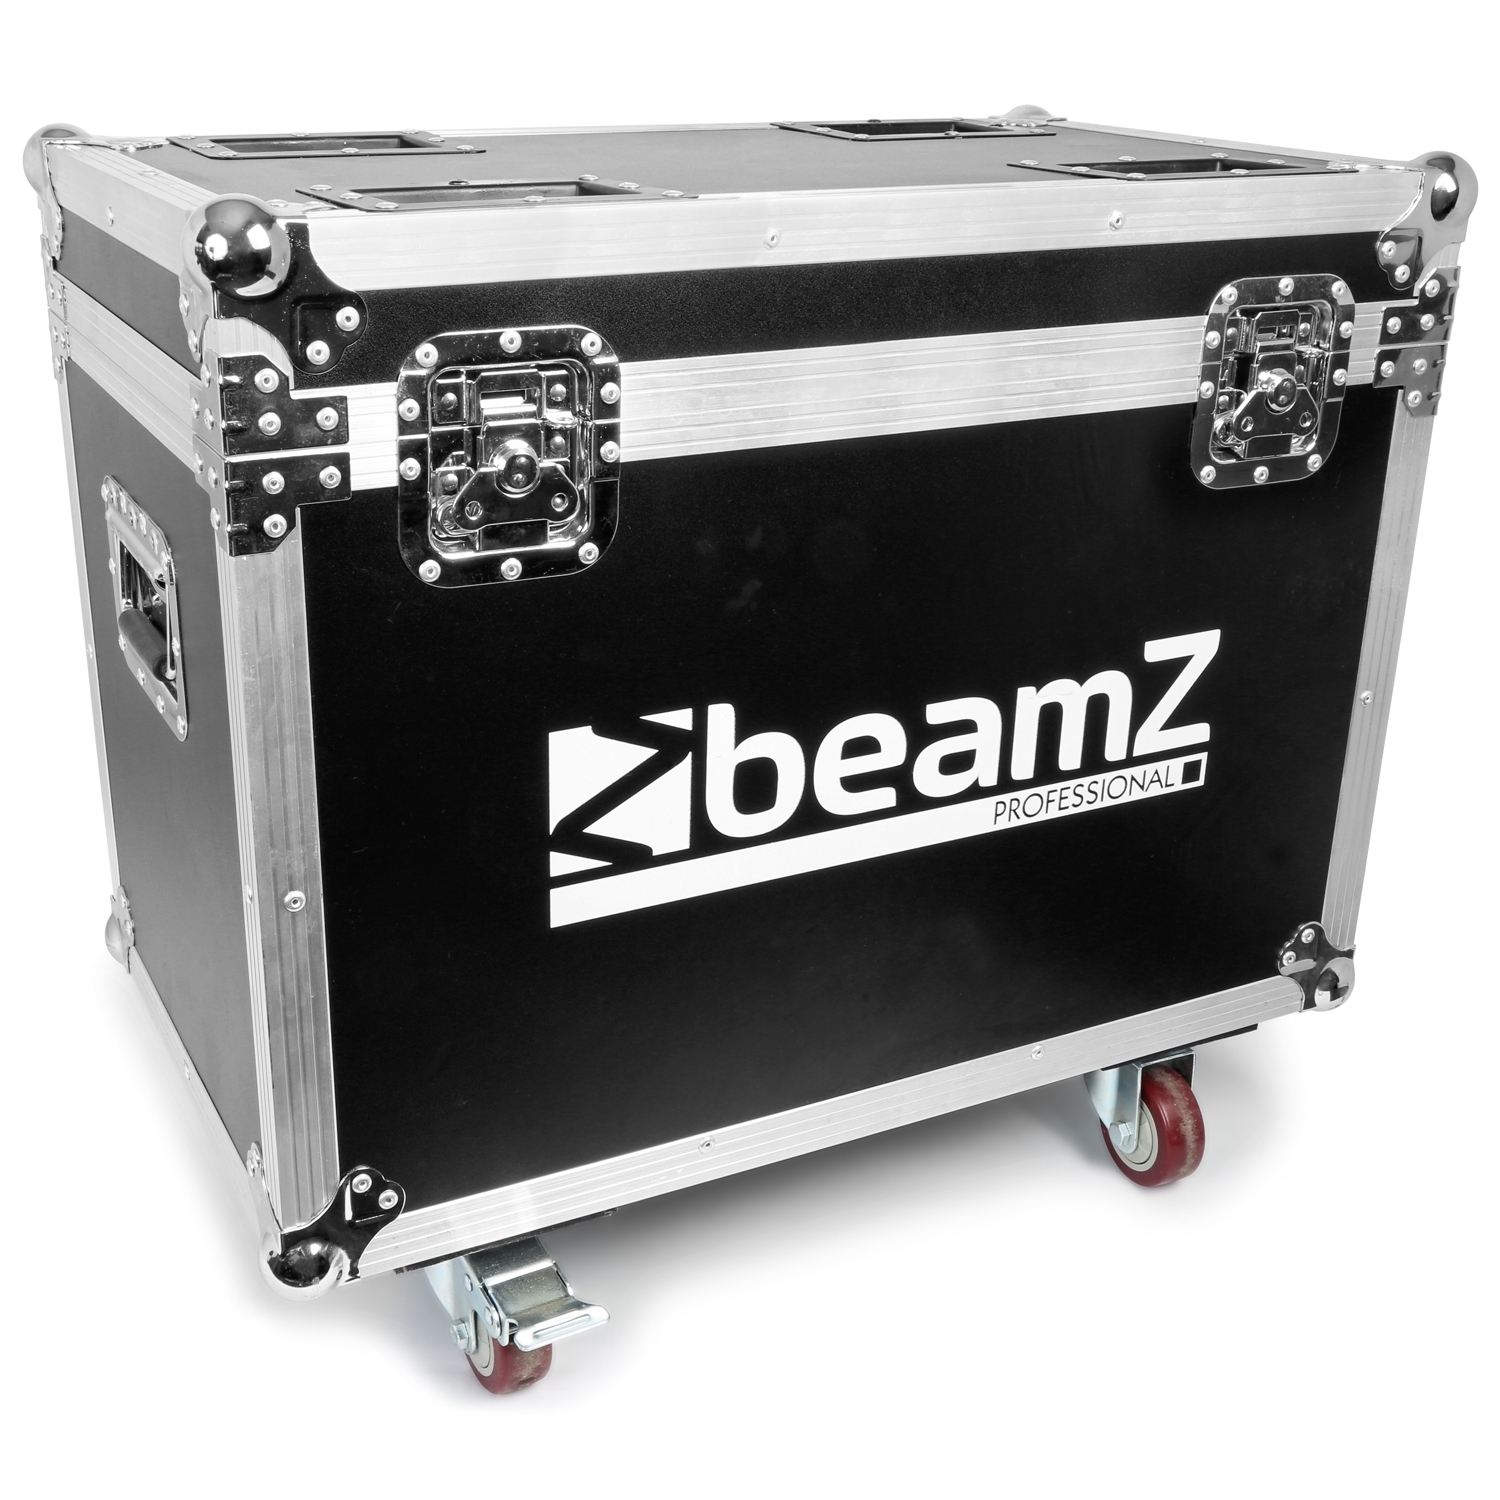 BeamZ Professional FC740I flightcase voor 2x de IGNITE740 Movinghead